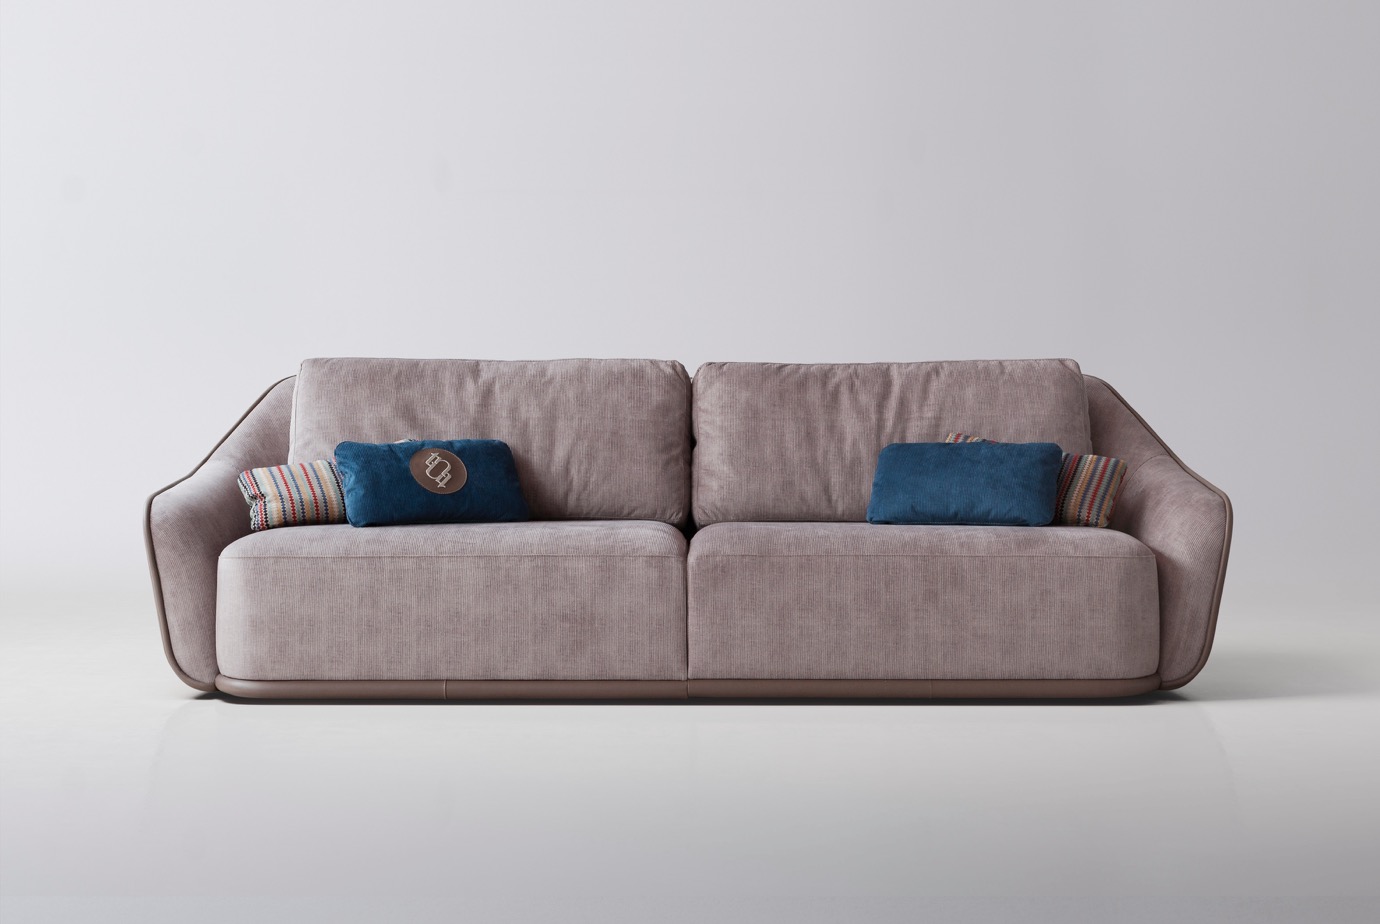 Shell - Modular Sofa / Carlos Soriano